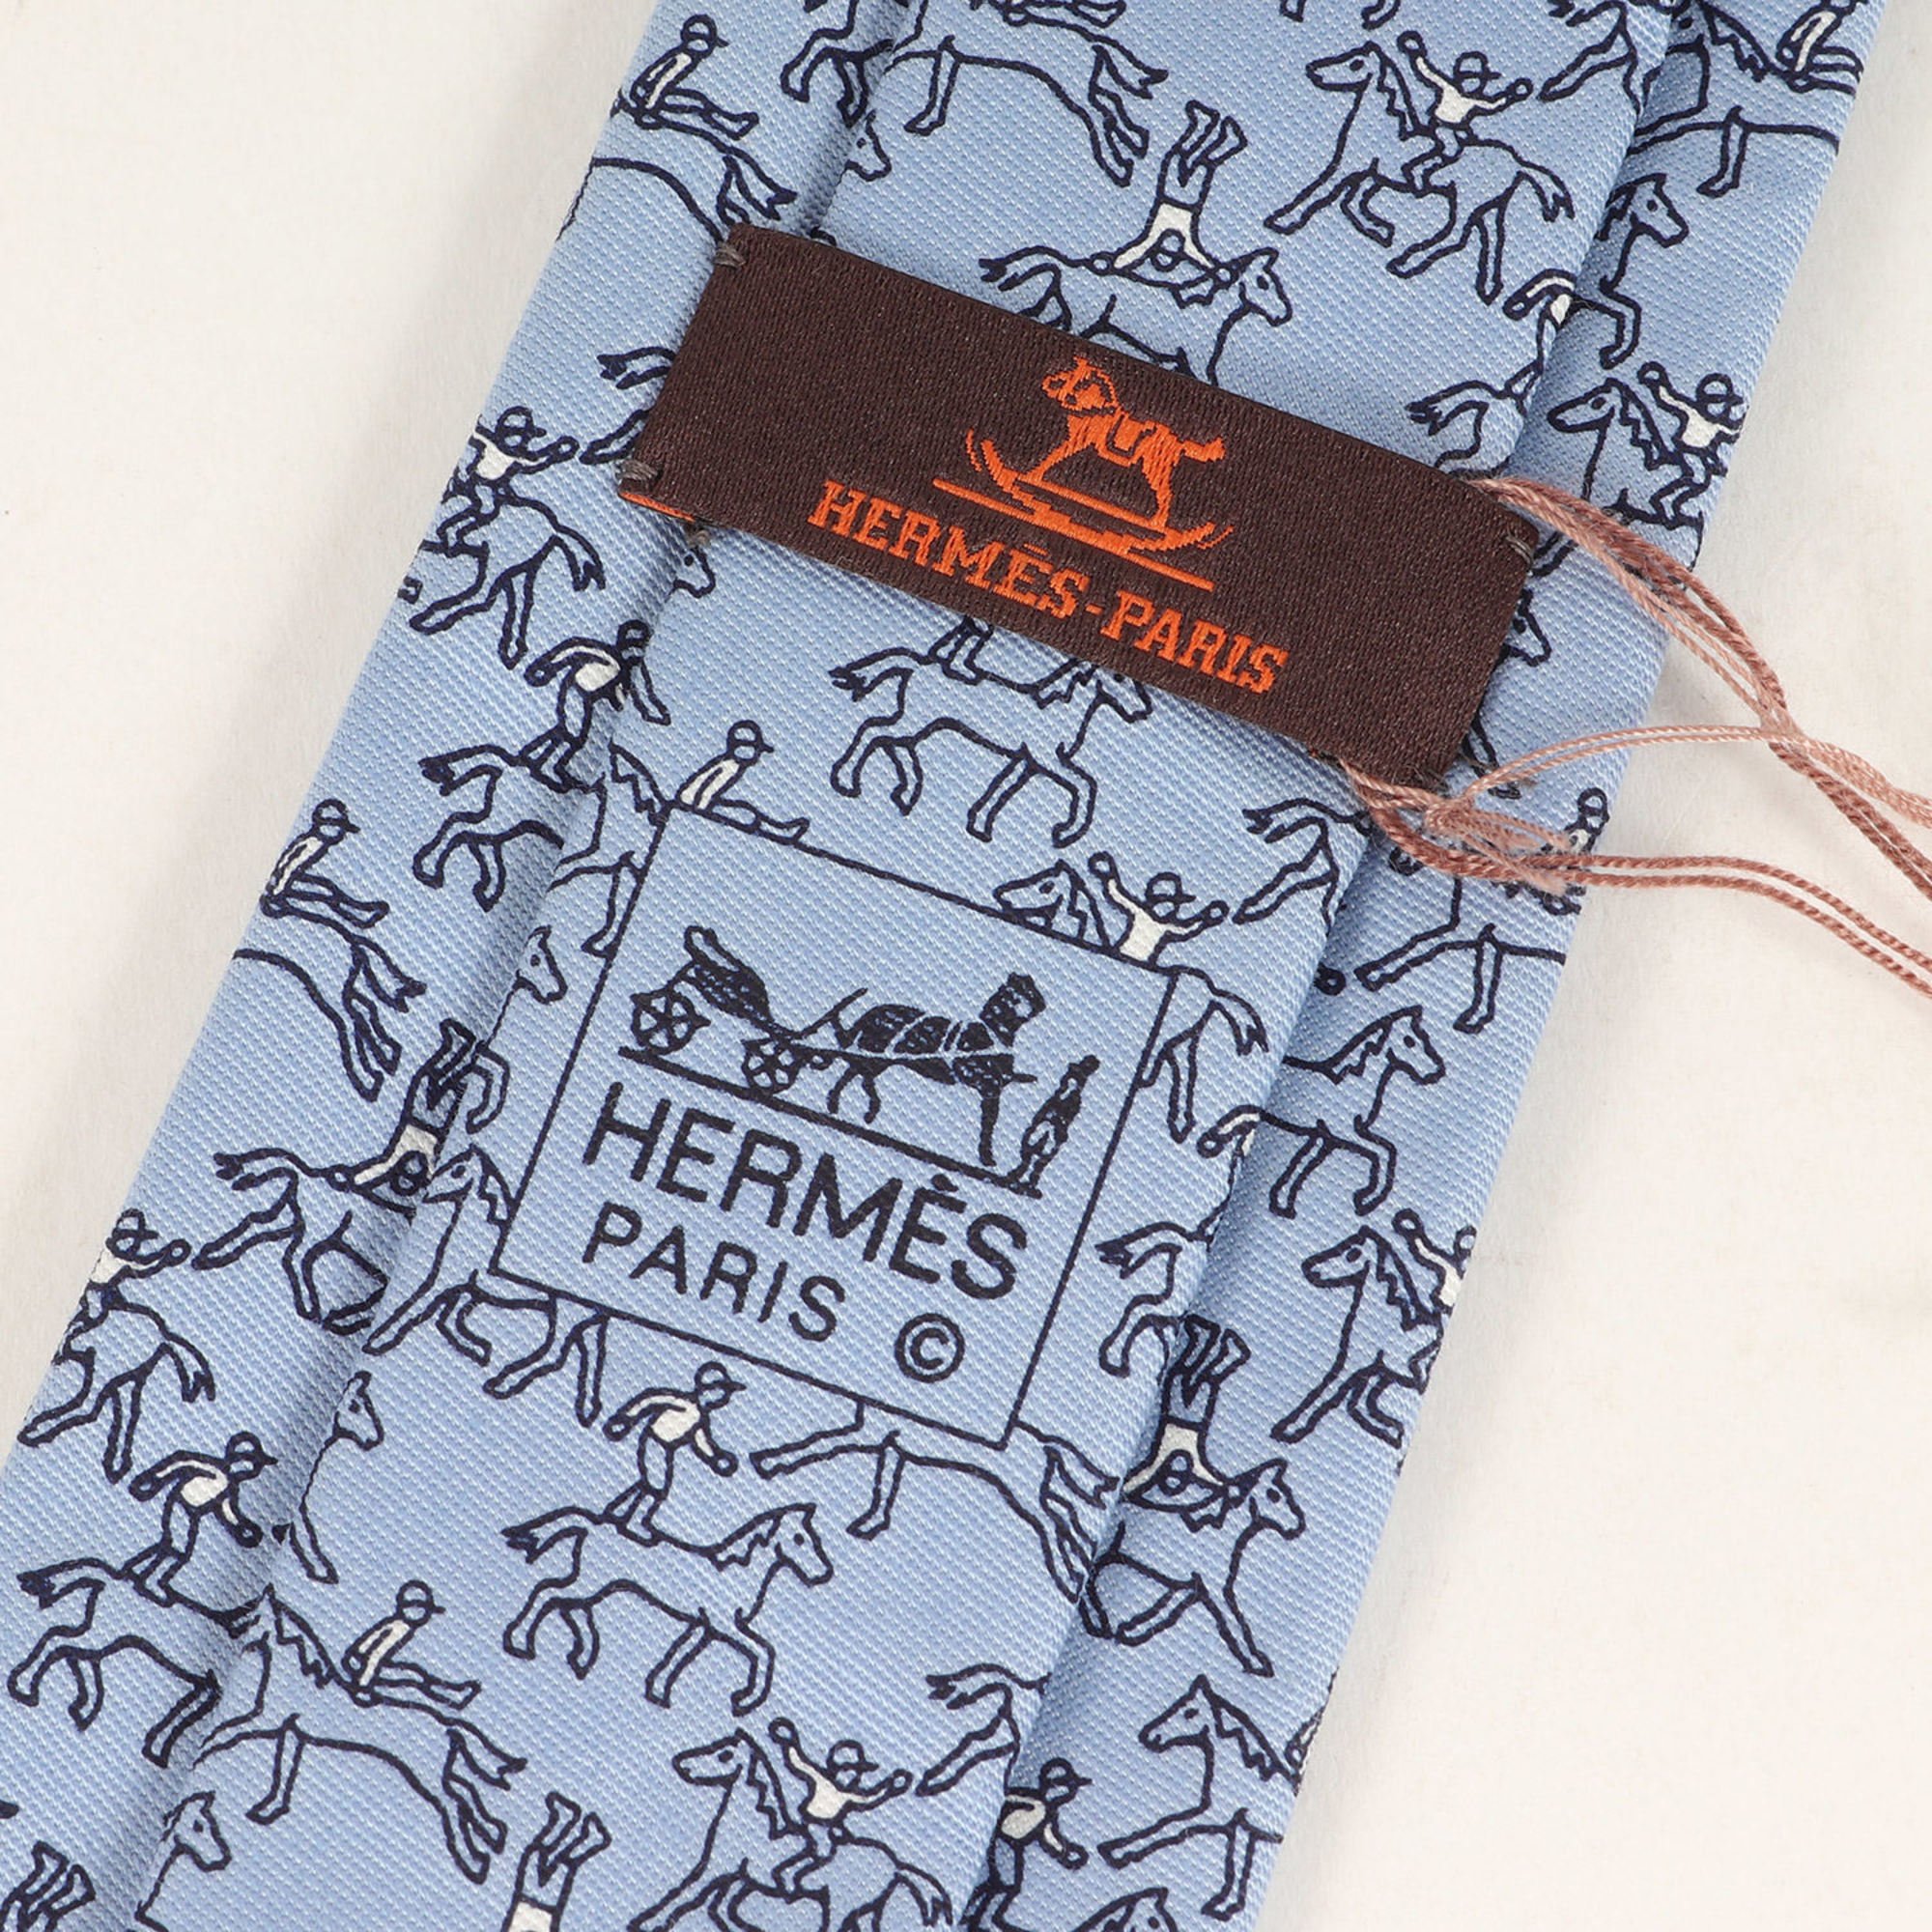 HERMES Horseback Riding Pattern Cotton Necktie Recent Model Light Blue Made in France Formal Business Office Casual